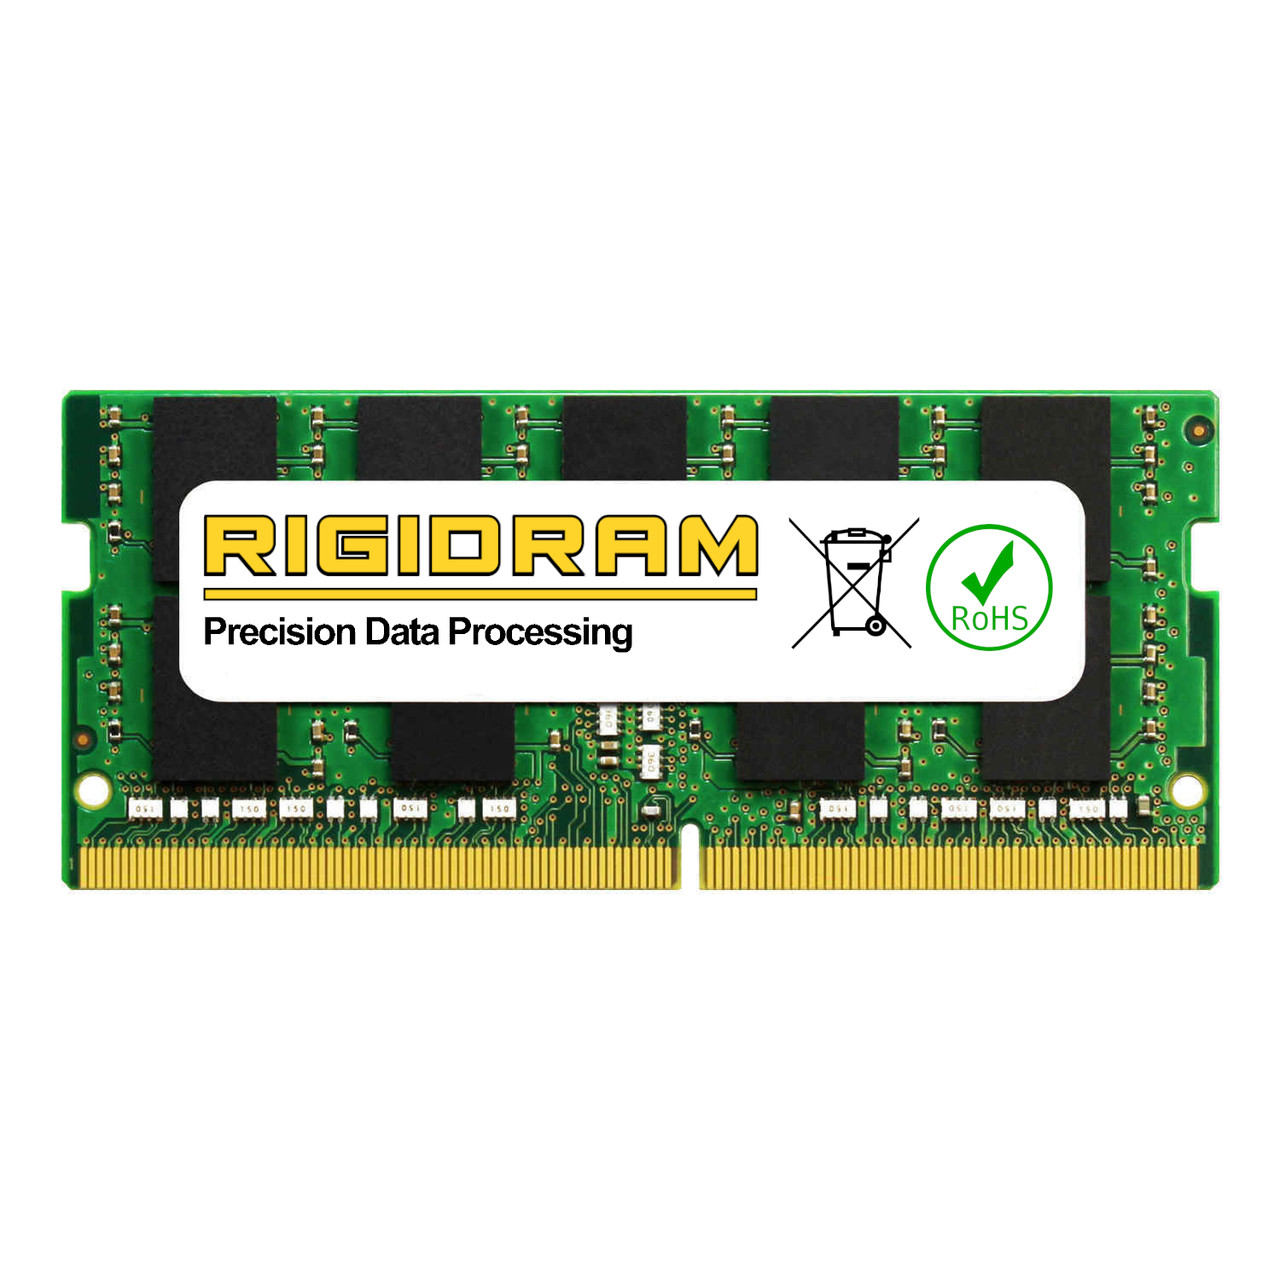 eBay*16GB Synology DS3622xs+ NAS Systems DDR4 2666MHz ECC Sodimm Memory RAM Upgrade